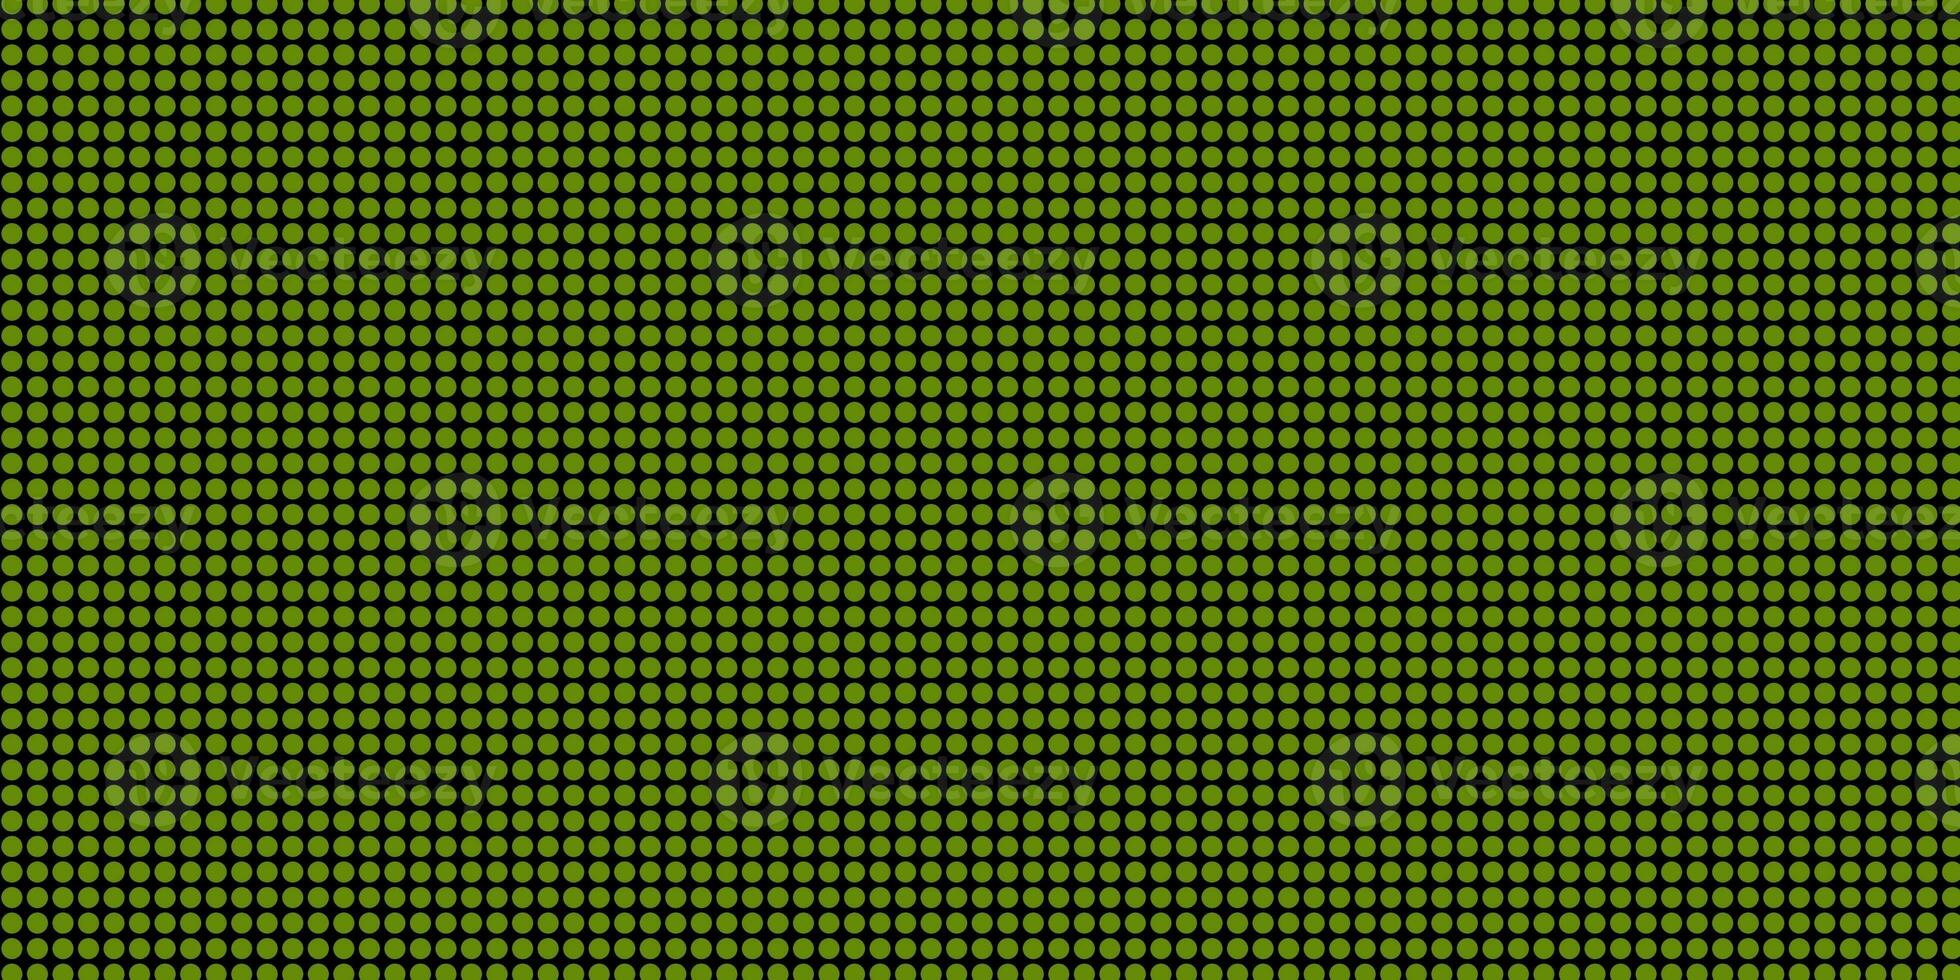 sjabloon achtergrond in groen polka stippen. foto